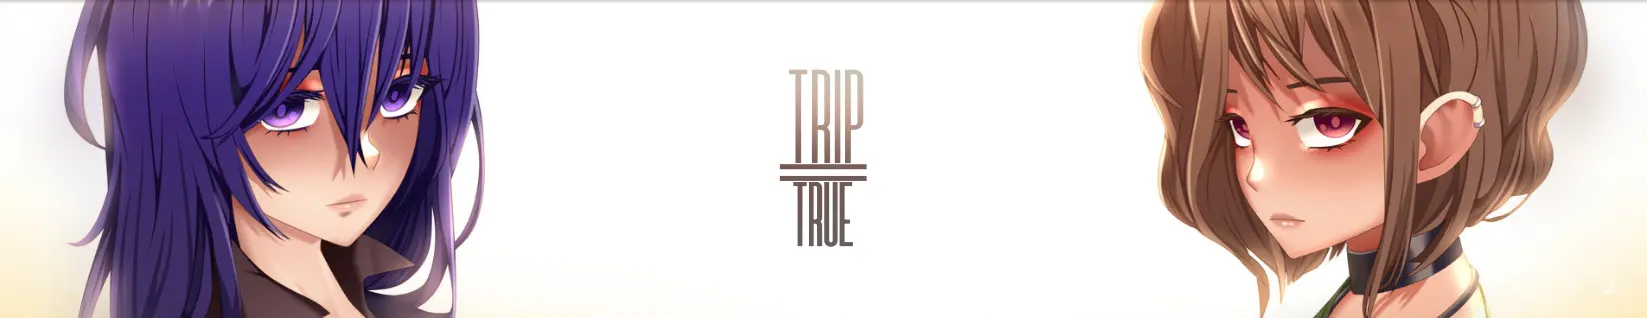 Trip=True main image